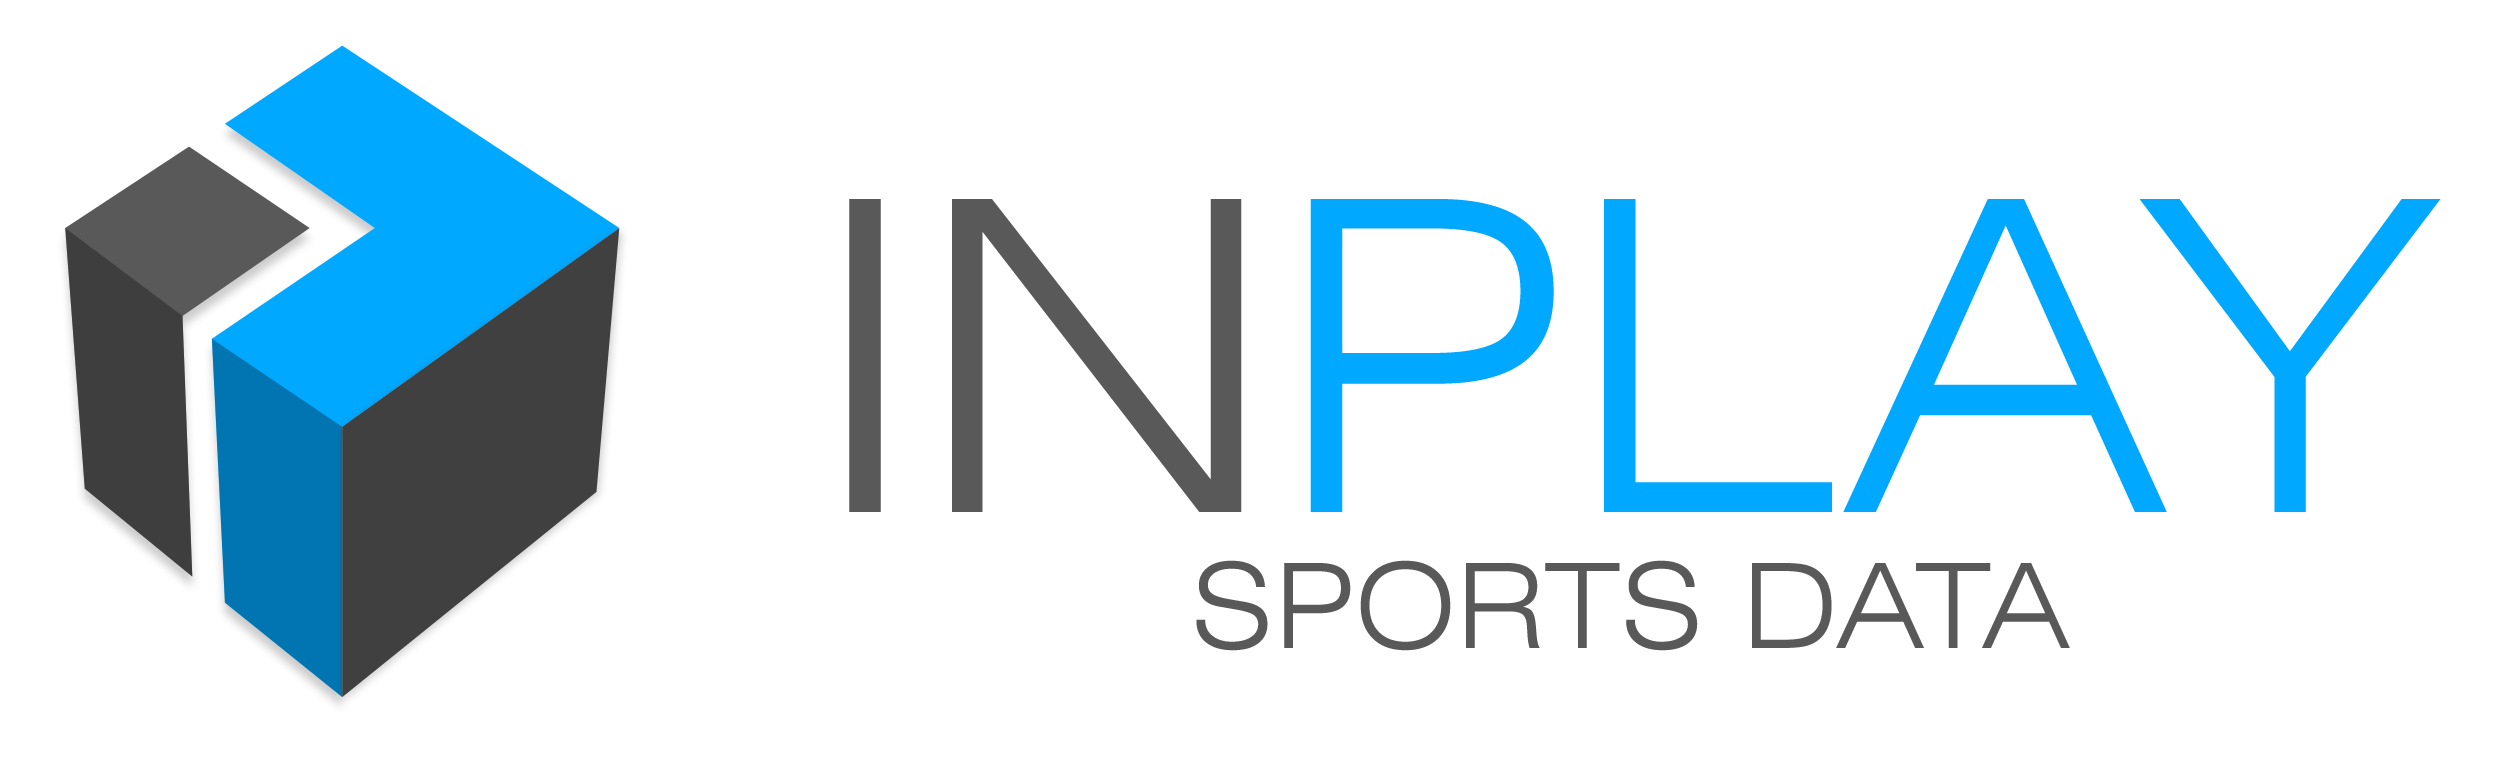 inplay sports data logo